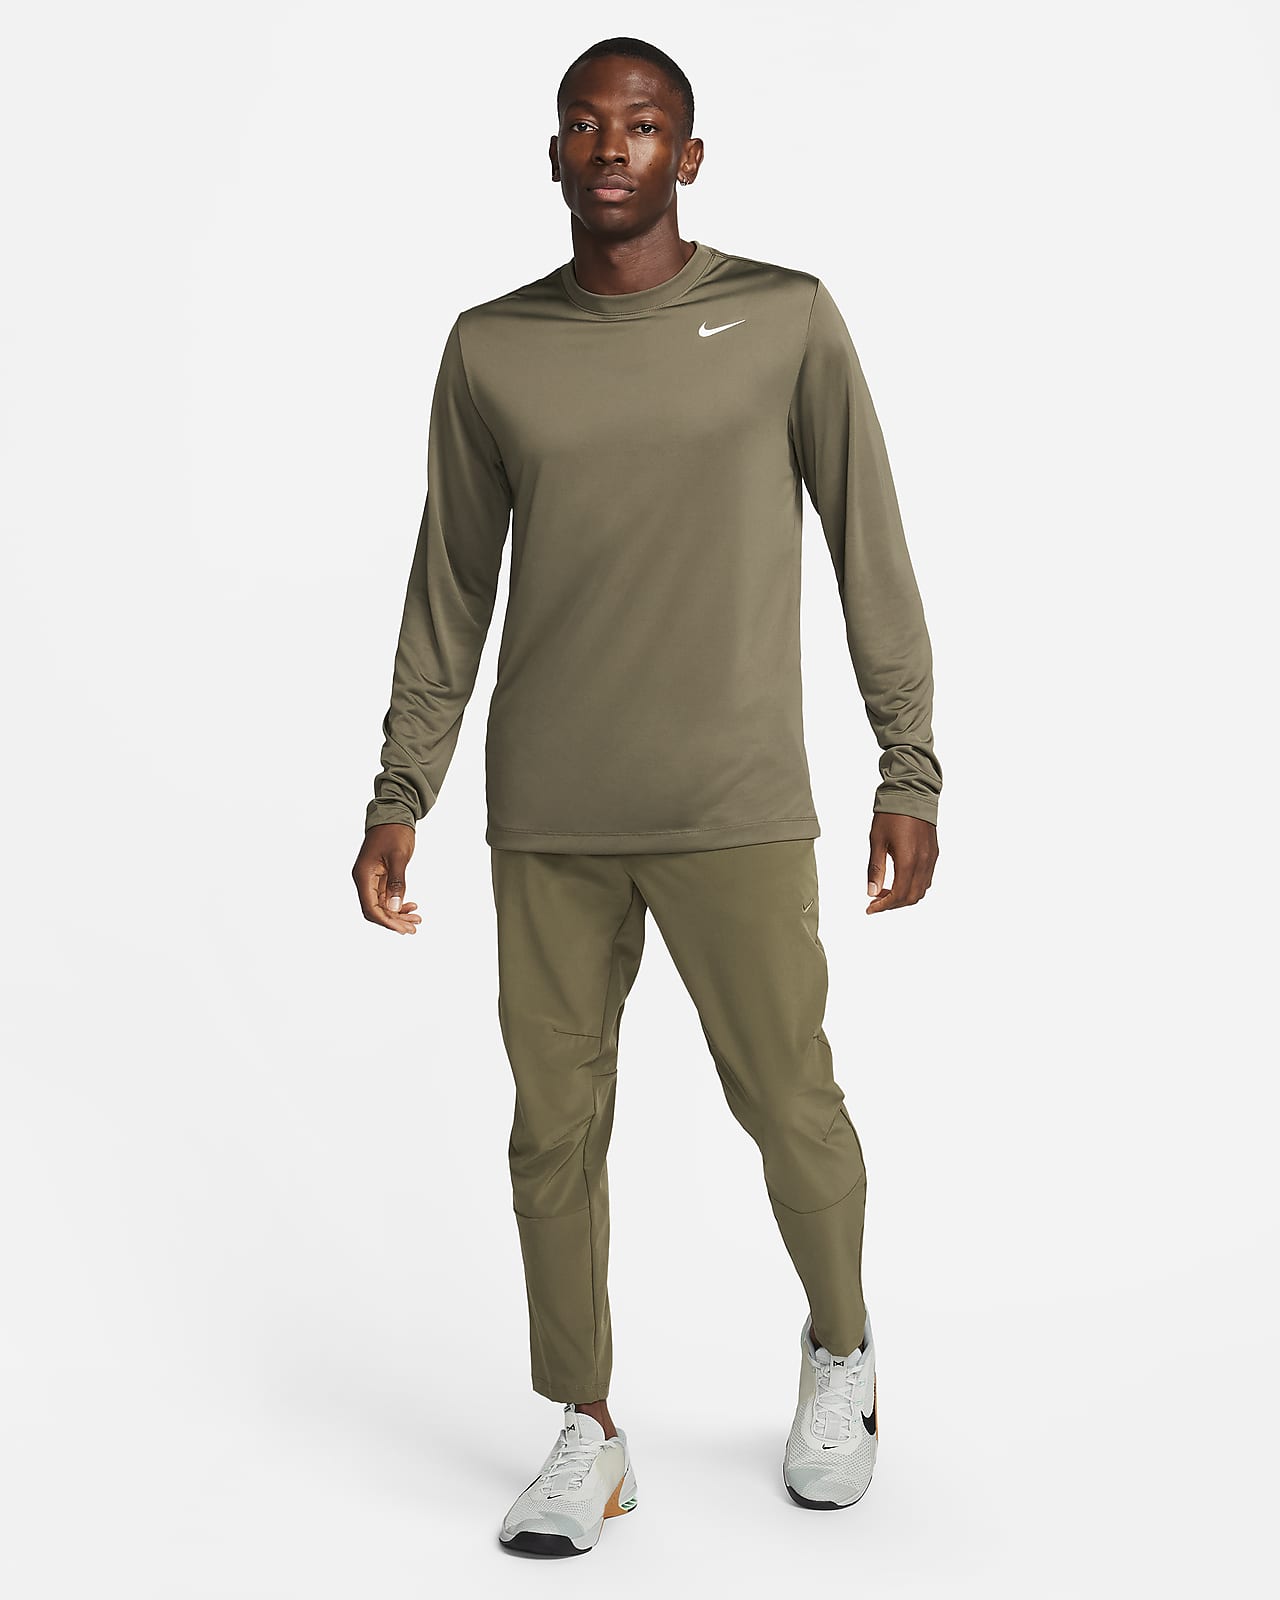 Air Jordan Compression Pants Men's Black New without Tags 3XL 456